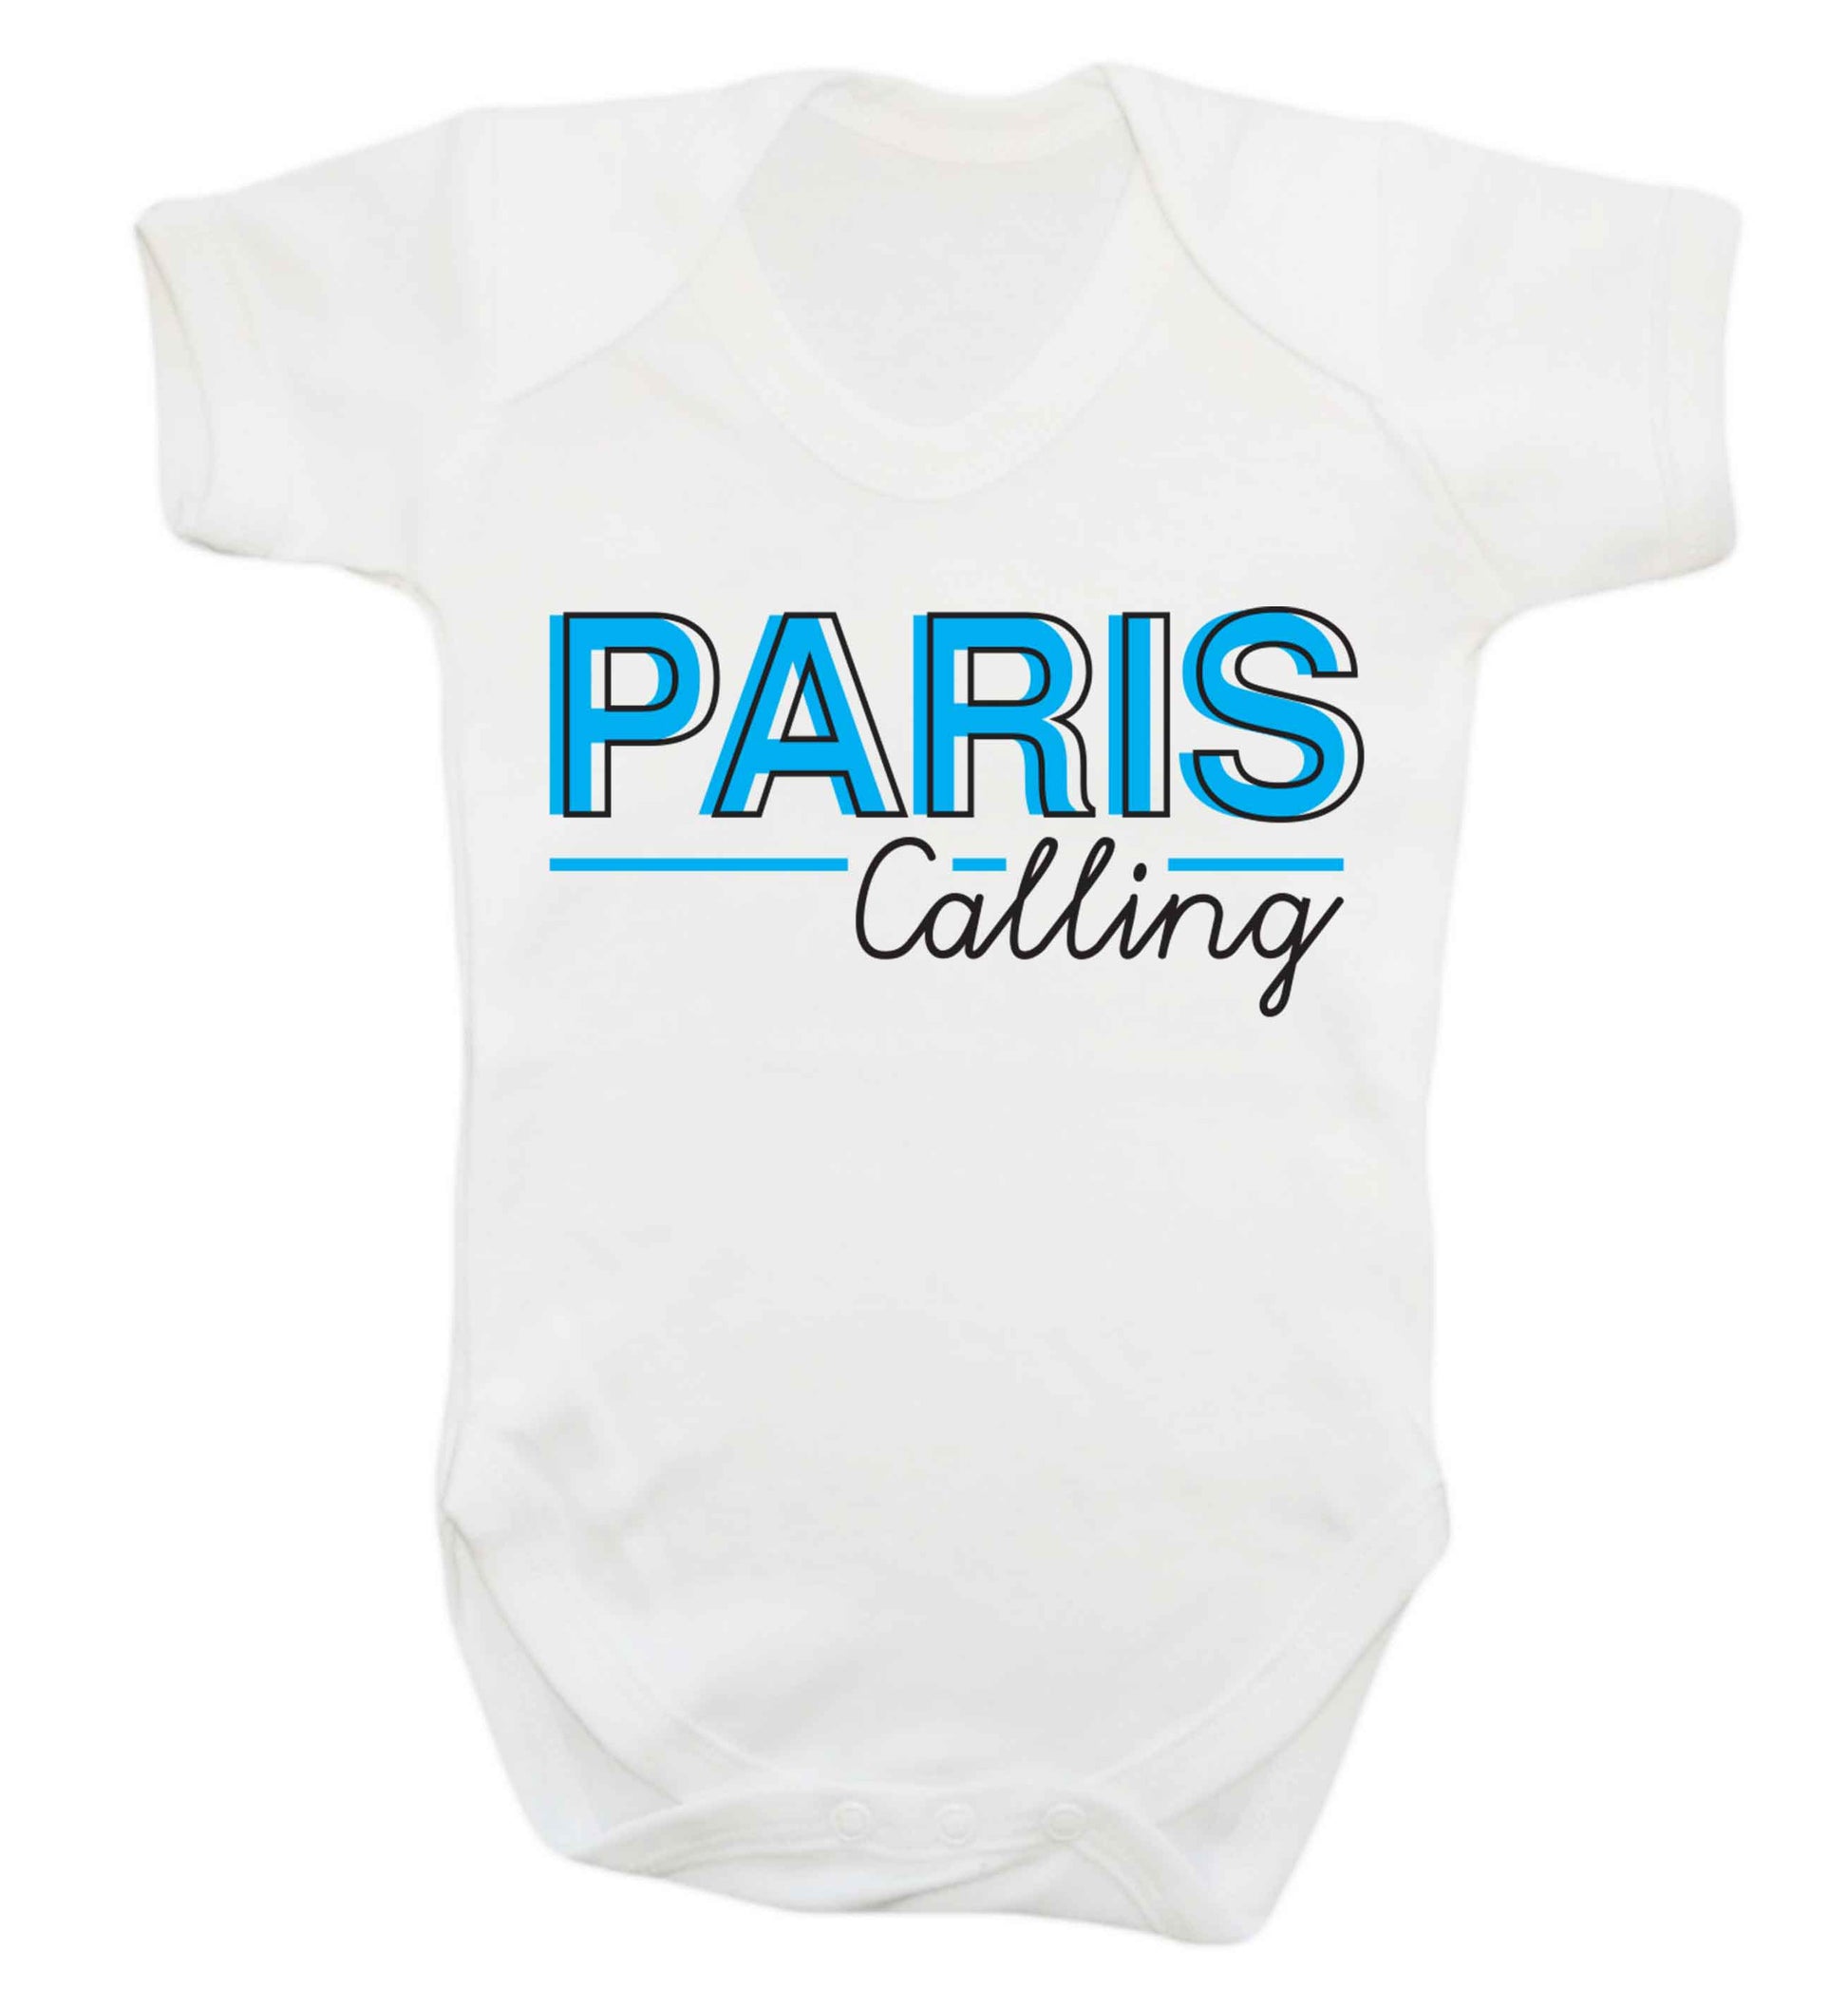 Paris calling Baby Vest white 18-24 months